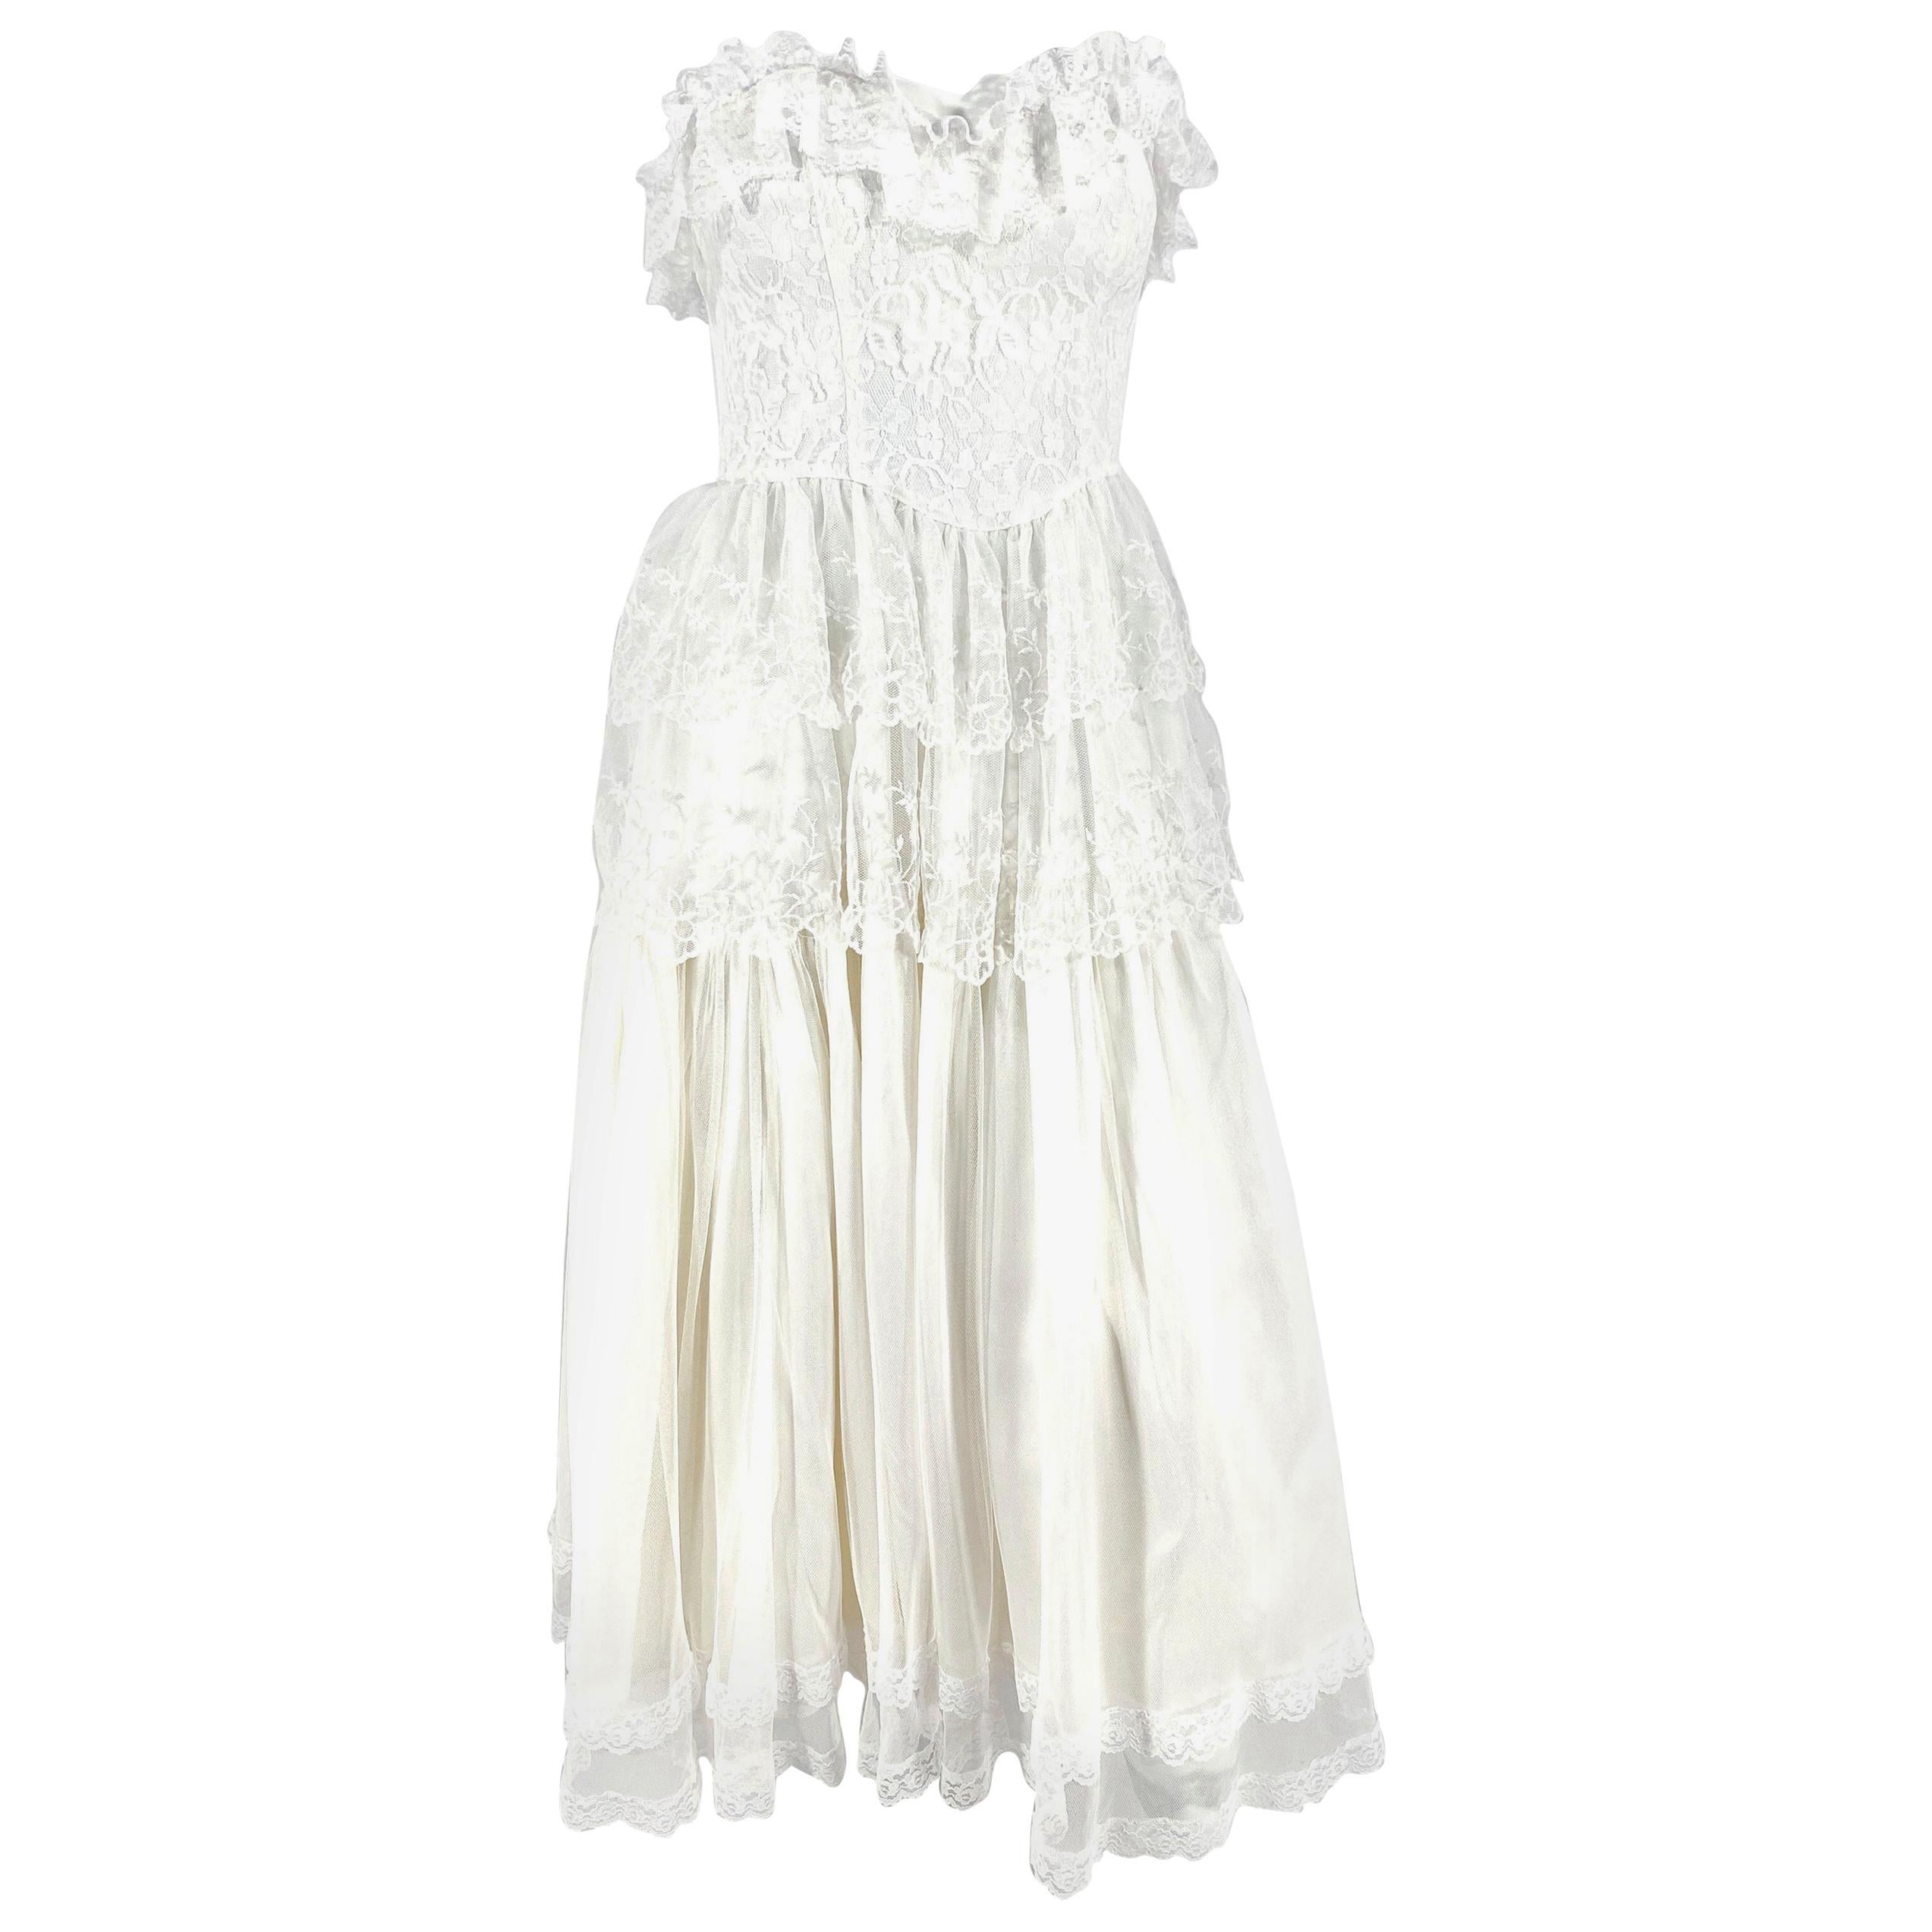 1980s Gunne Sax White Strapless Lace Dress